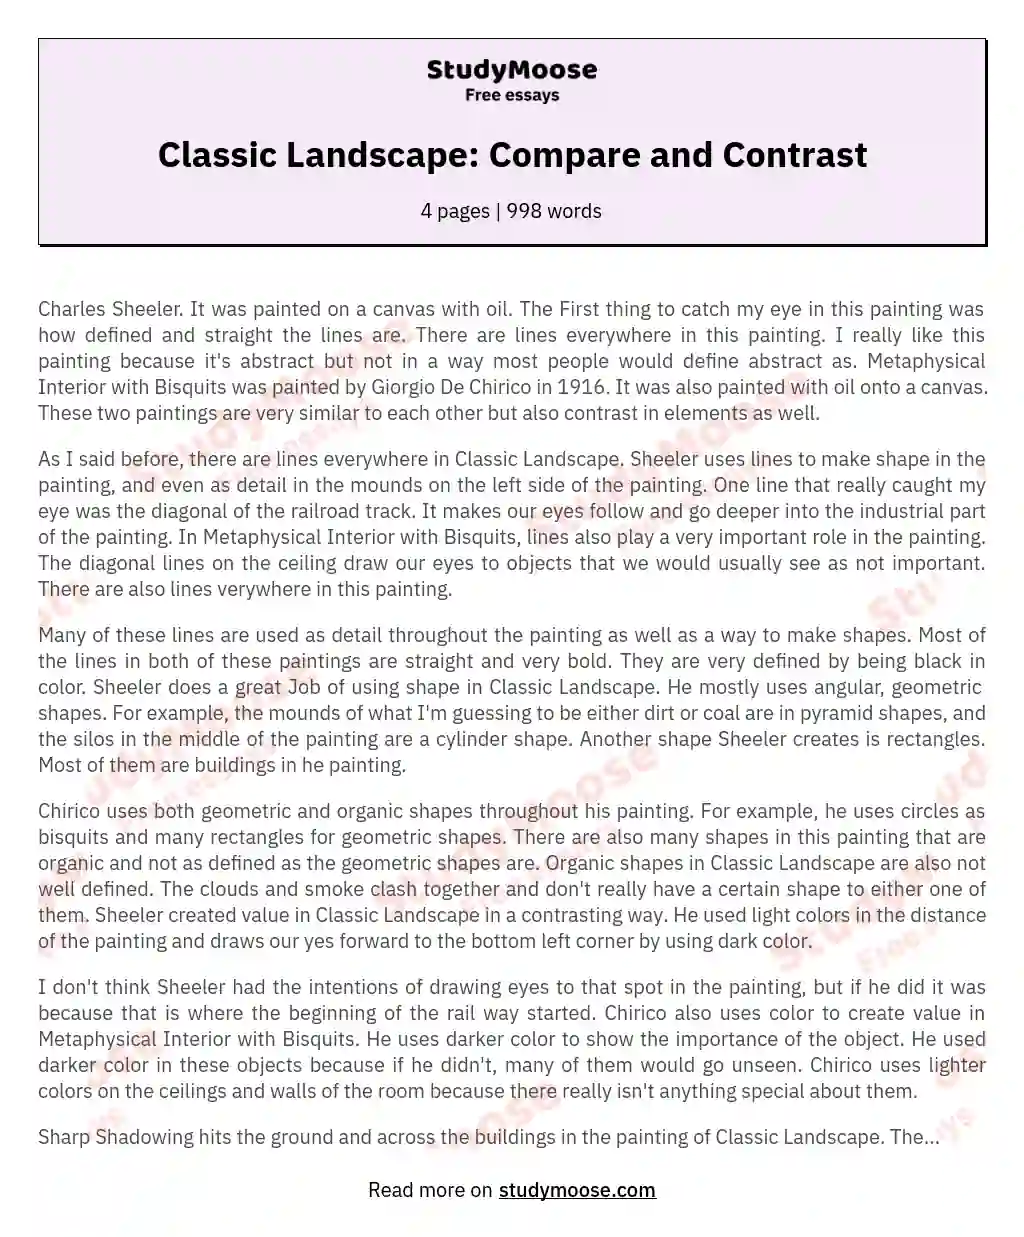 Classic Landscape: Compare and Contrast essay